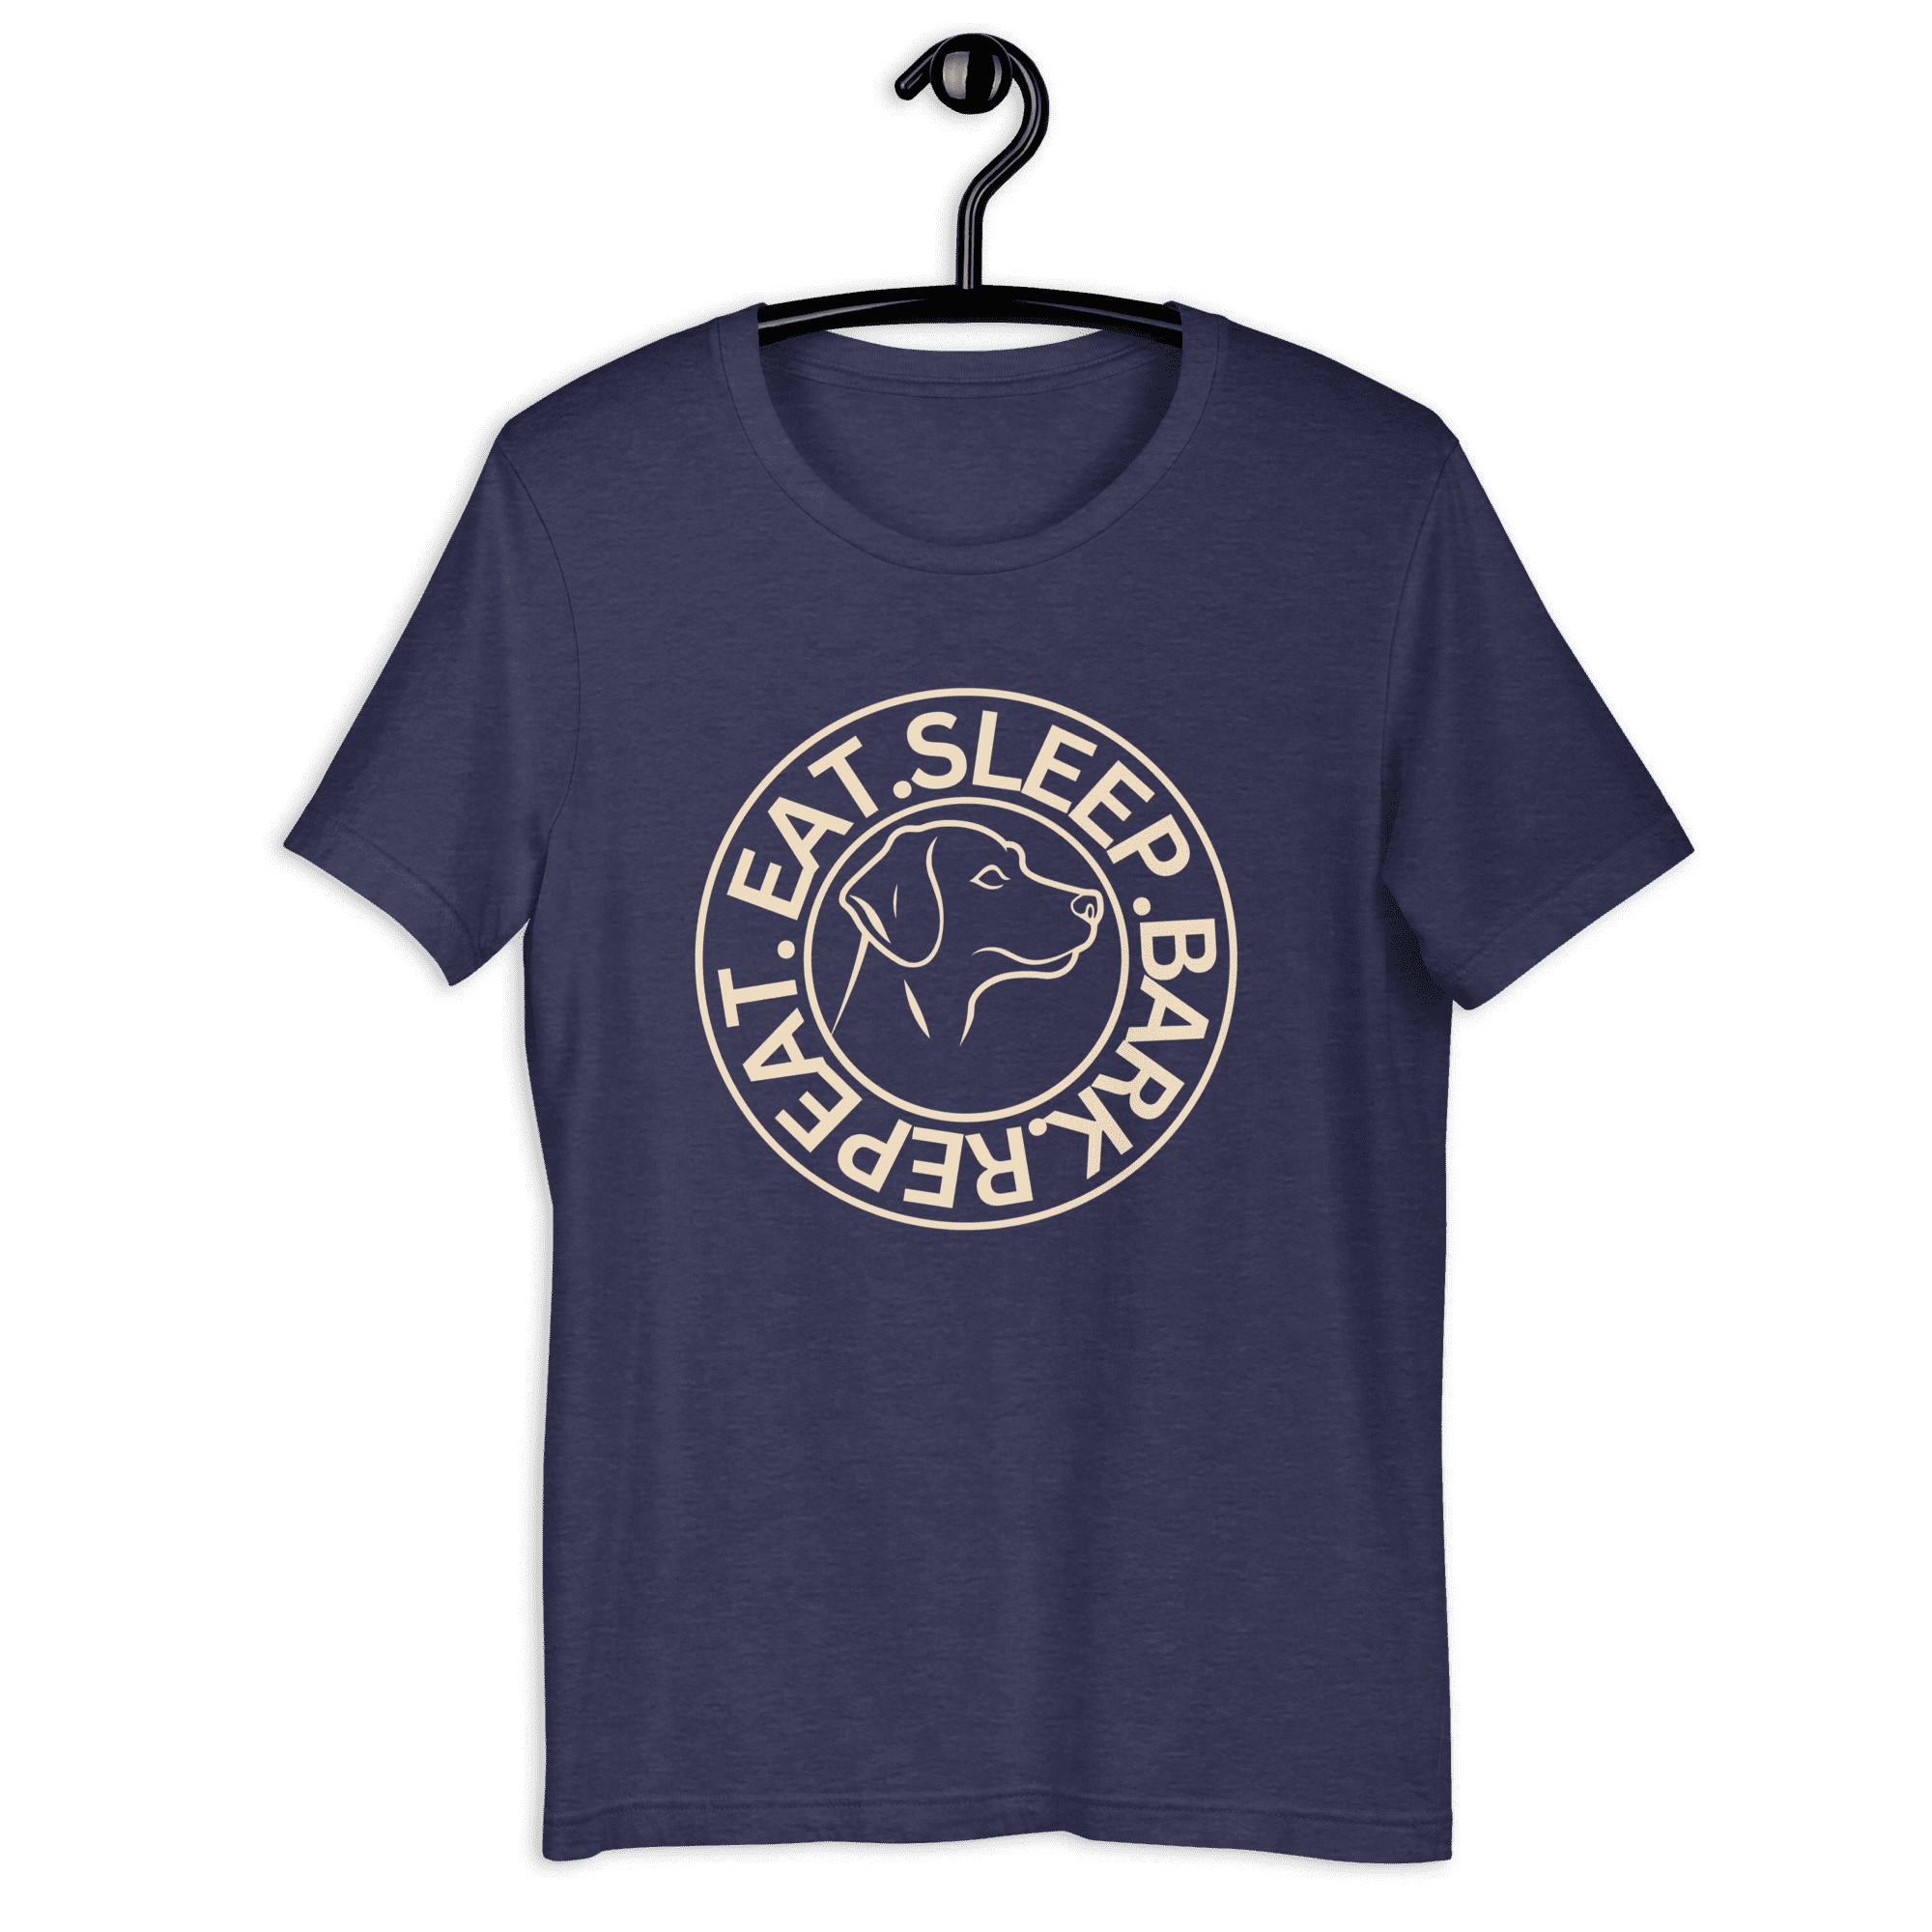 Eat Sleep Bark Repeat Labrador Retriever Unisex T-Shirt. Blue